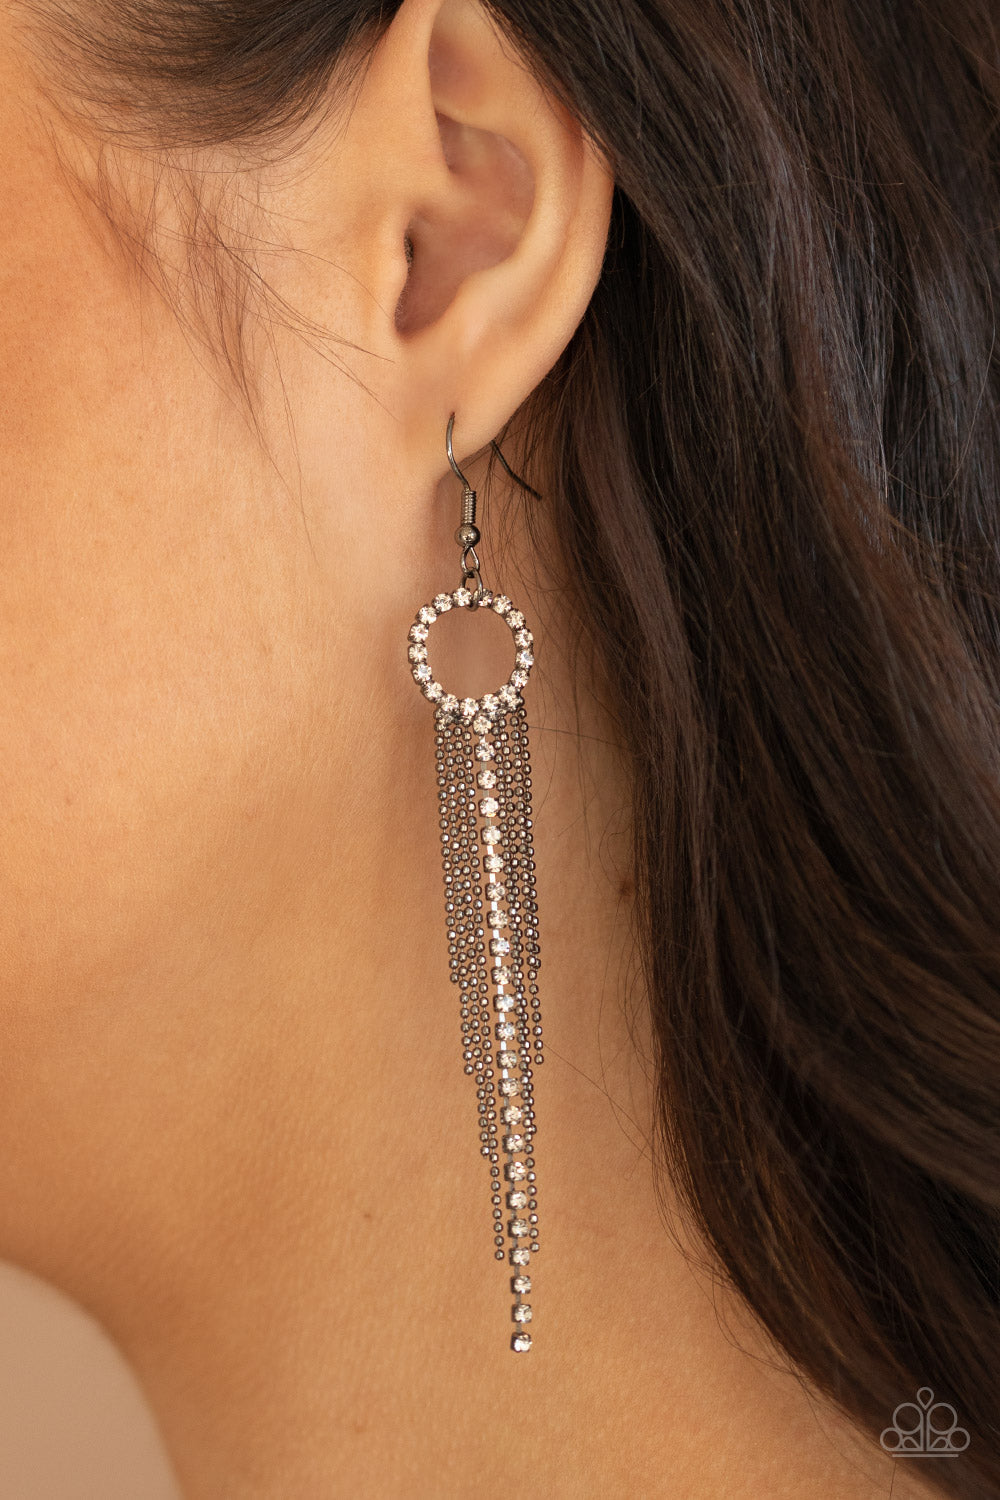 Paparazzi Pass The Glitter - Black - Earrings - $5 Jewelry with Ashley Swint